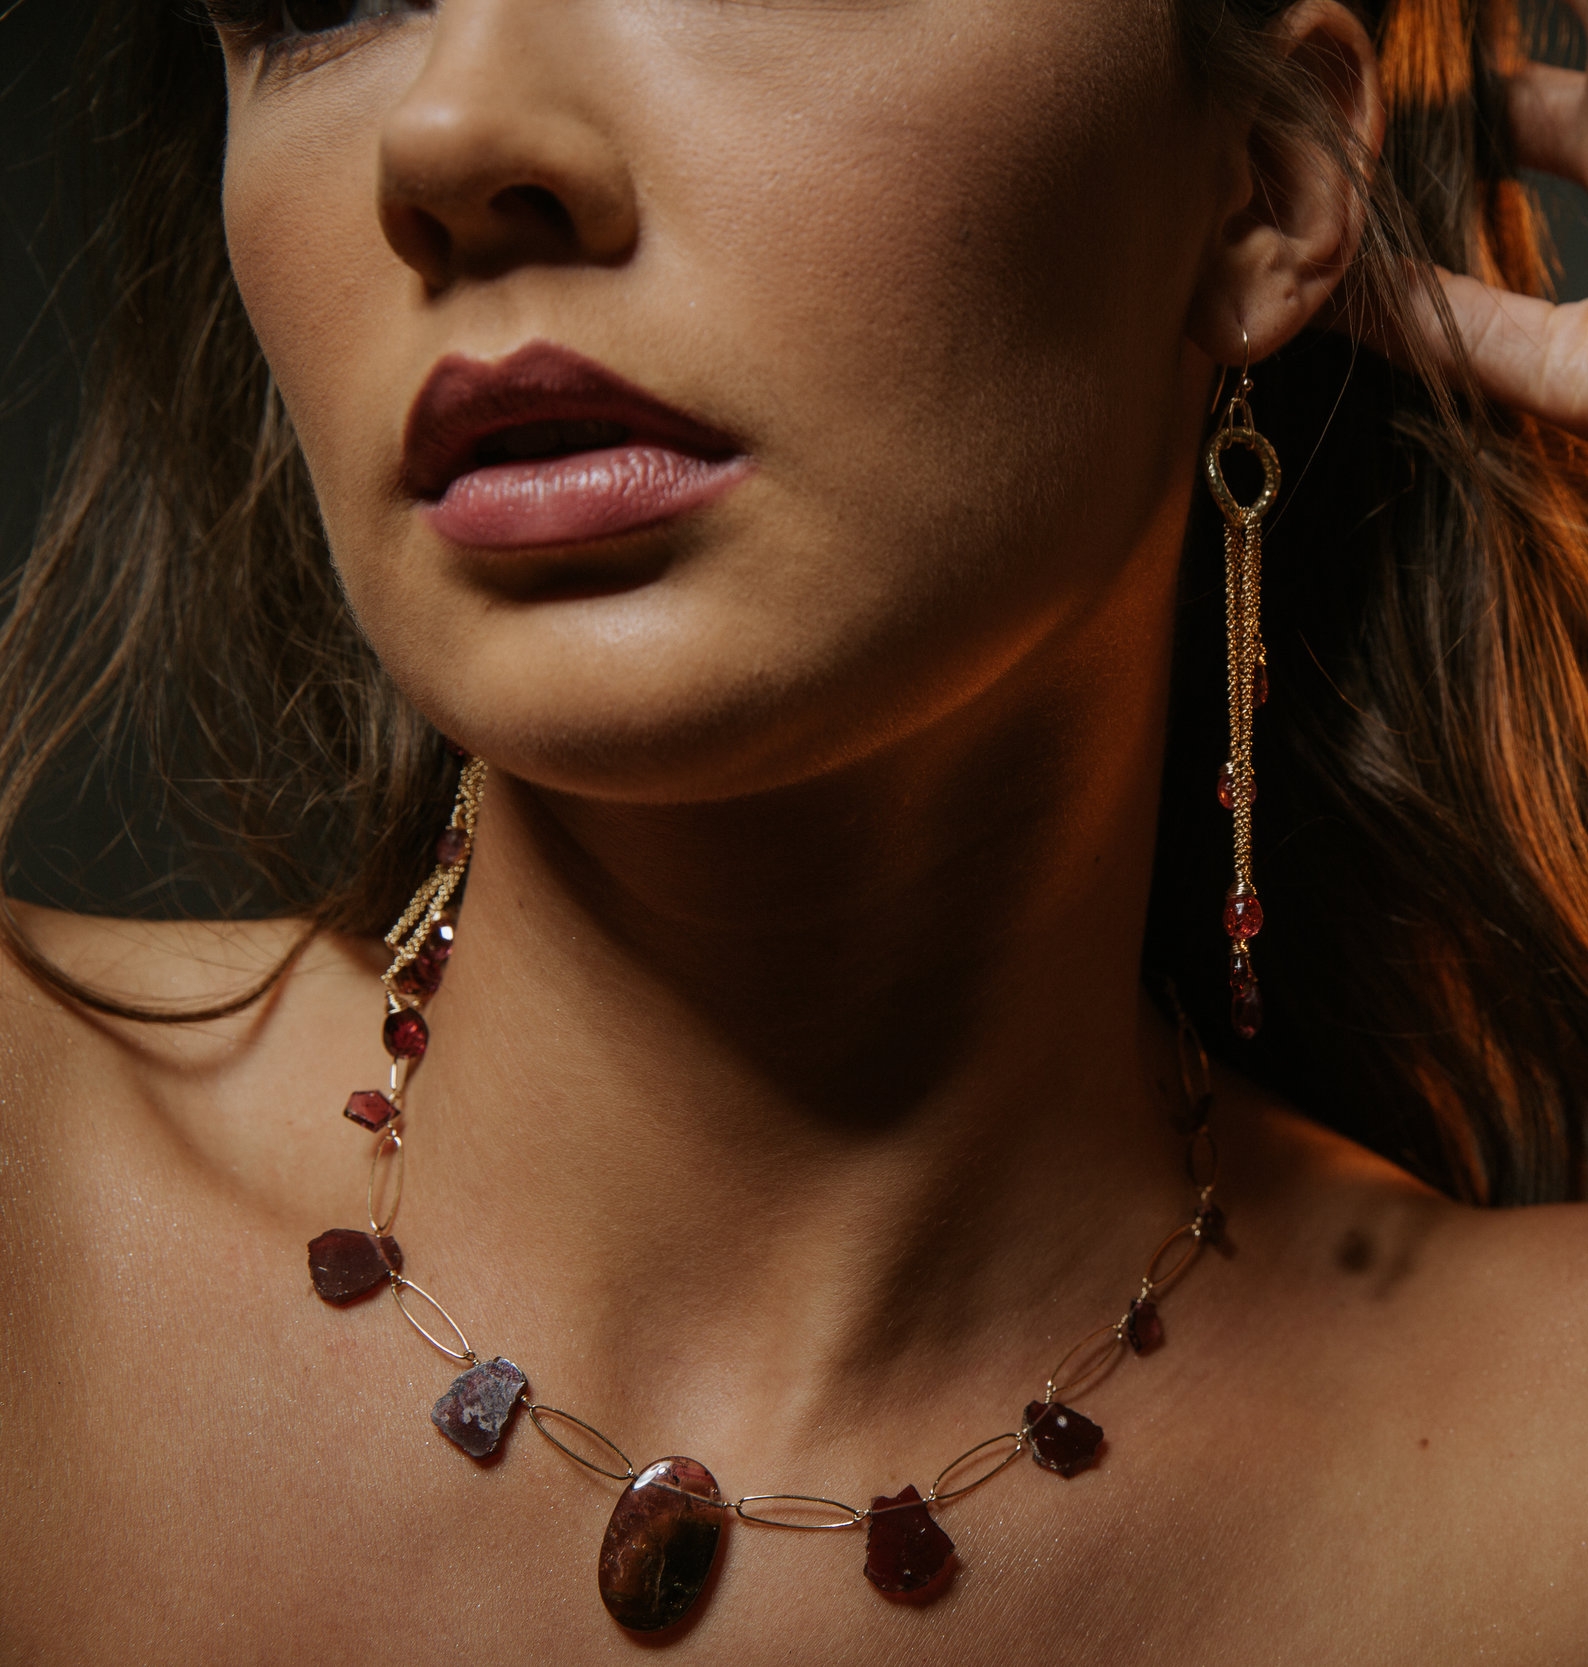 model wearing tourmaline and garnet necklace